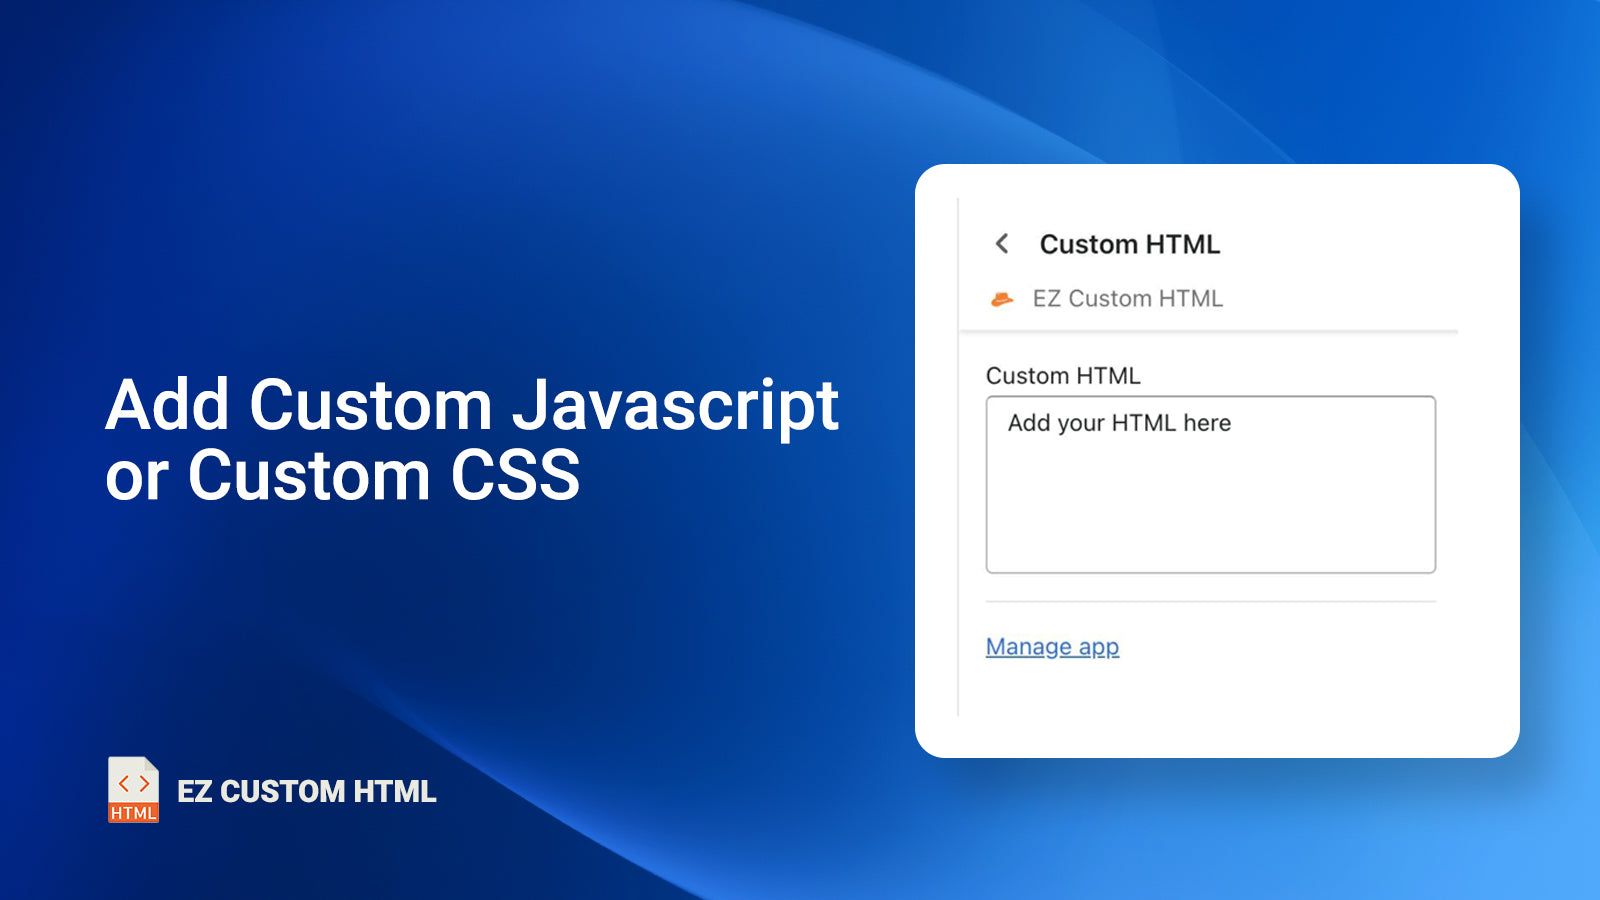 Can also add Custom Javascript or Custom CSS